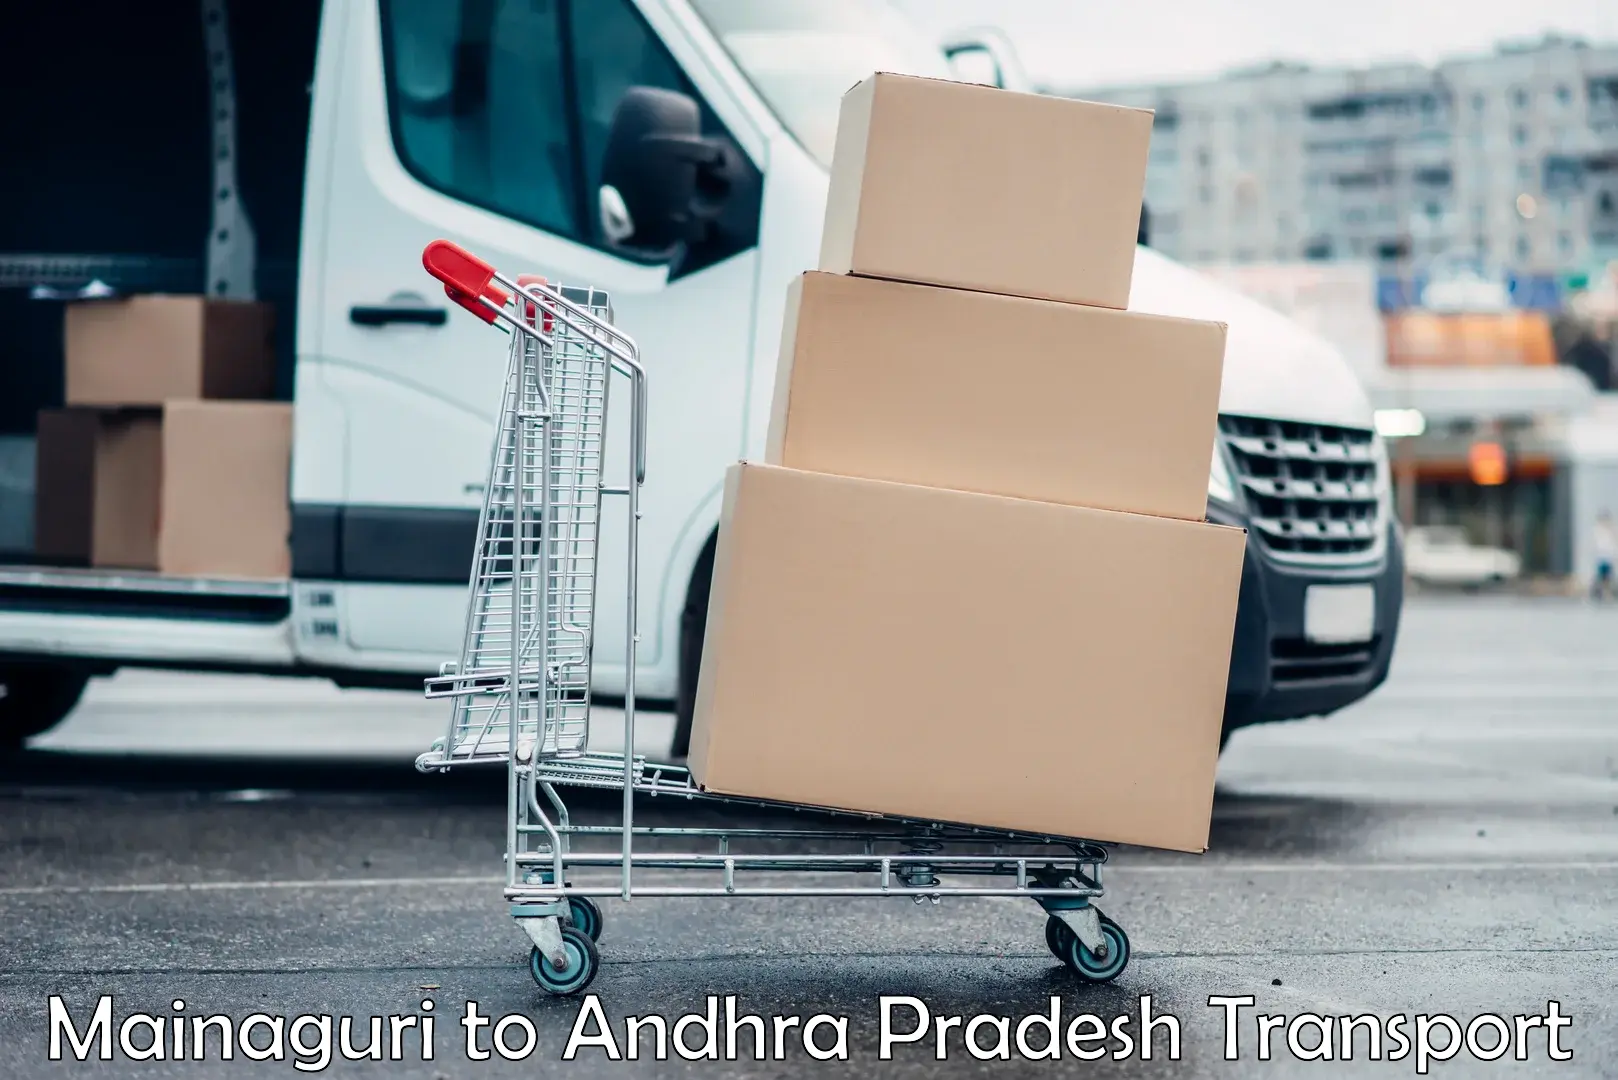 Truck transport companies in India Mainaguri to Tadikonda